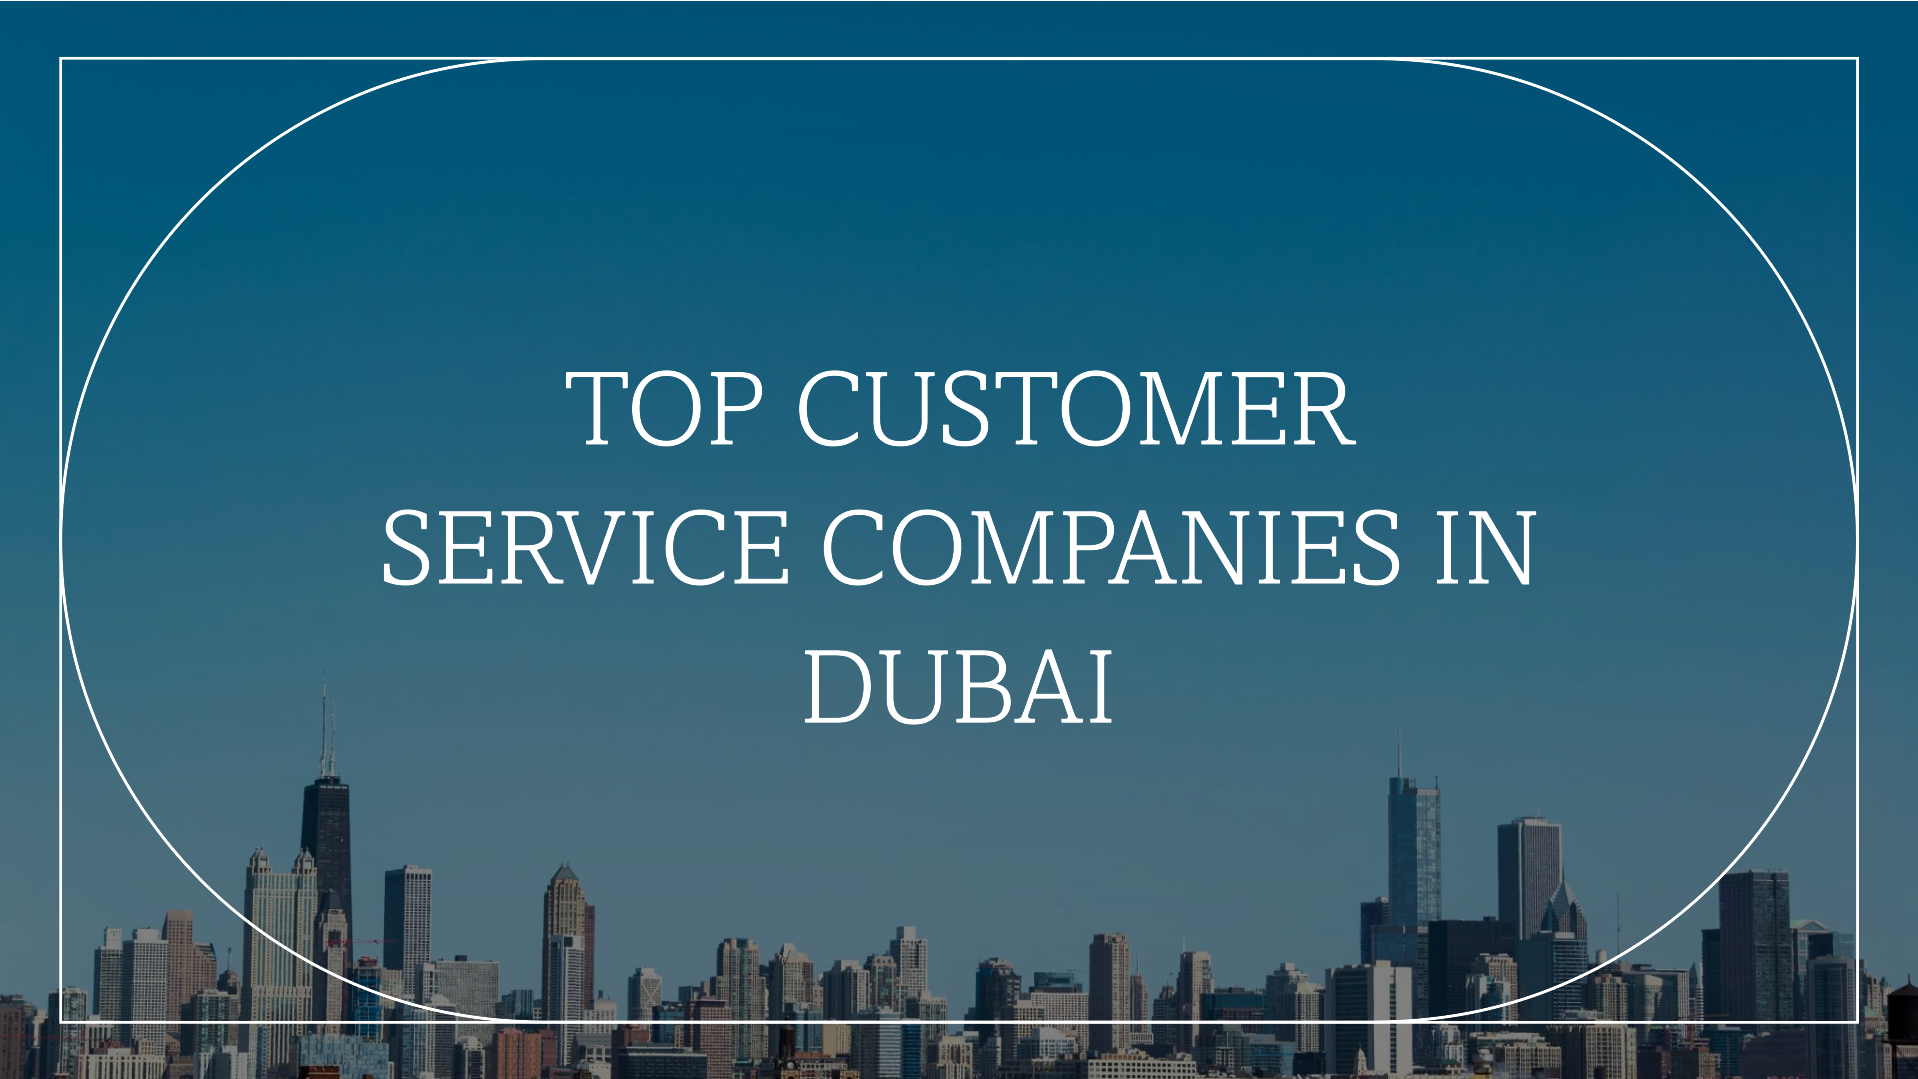 Customer Service companies in Dubai for Arabic and English speakers